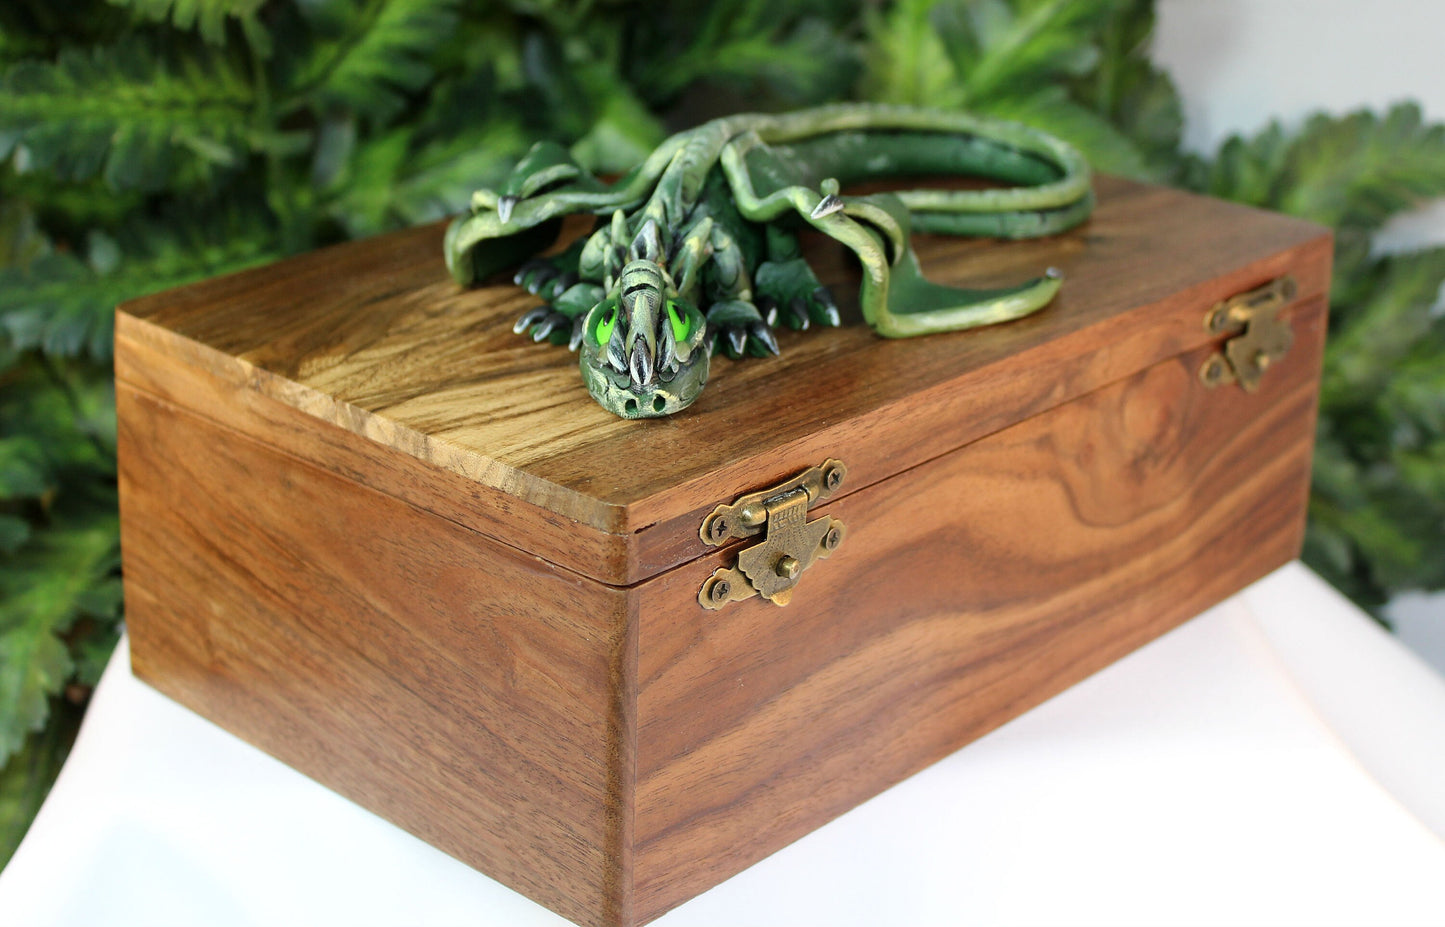 Polymer Clay Green Dragon on Natural Wood Box - 1-086